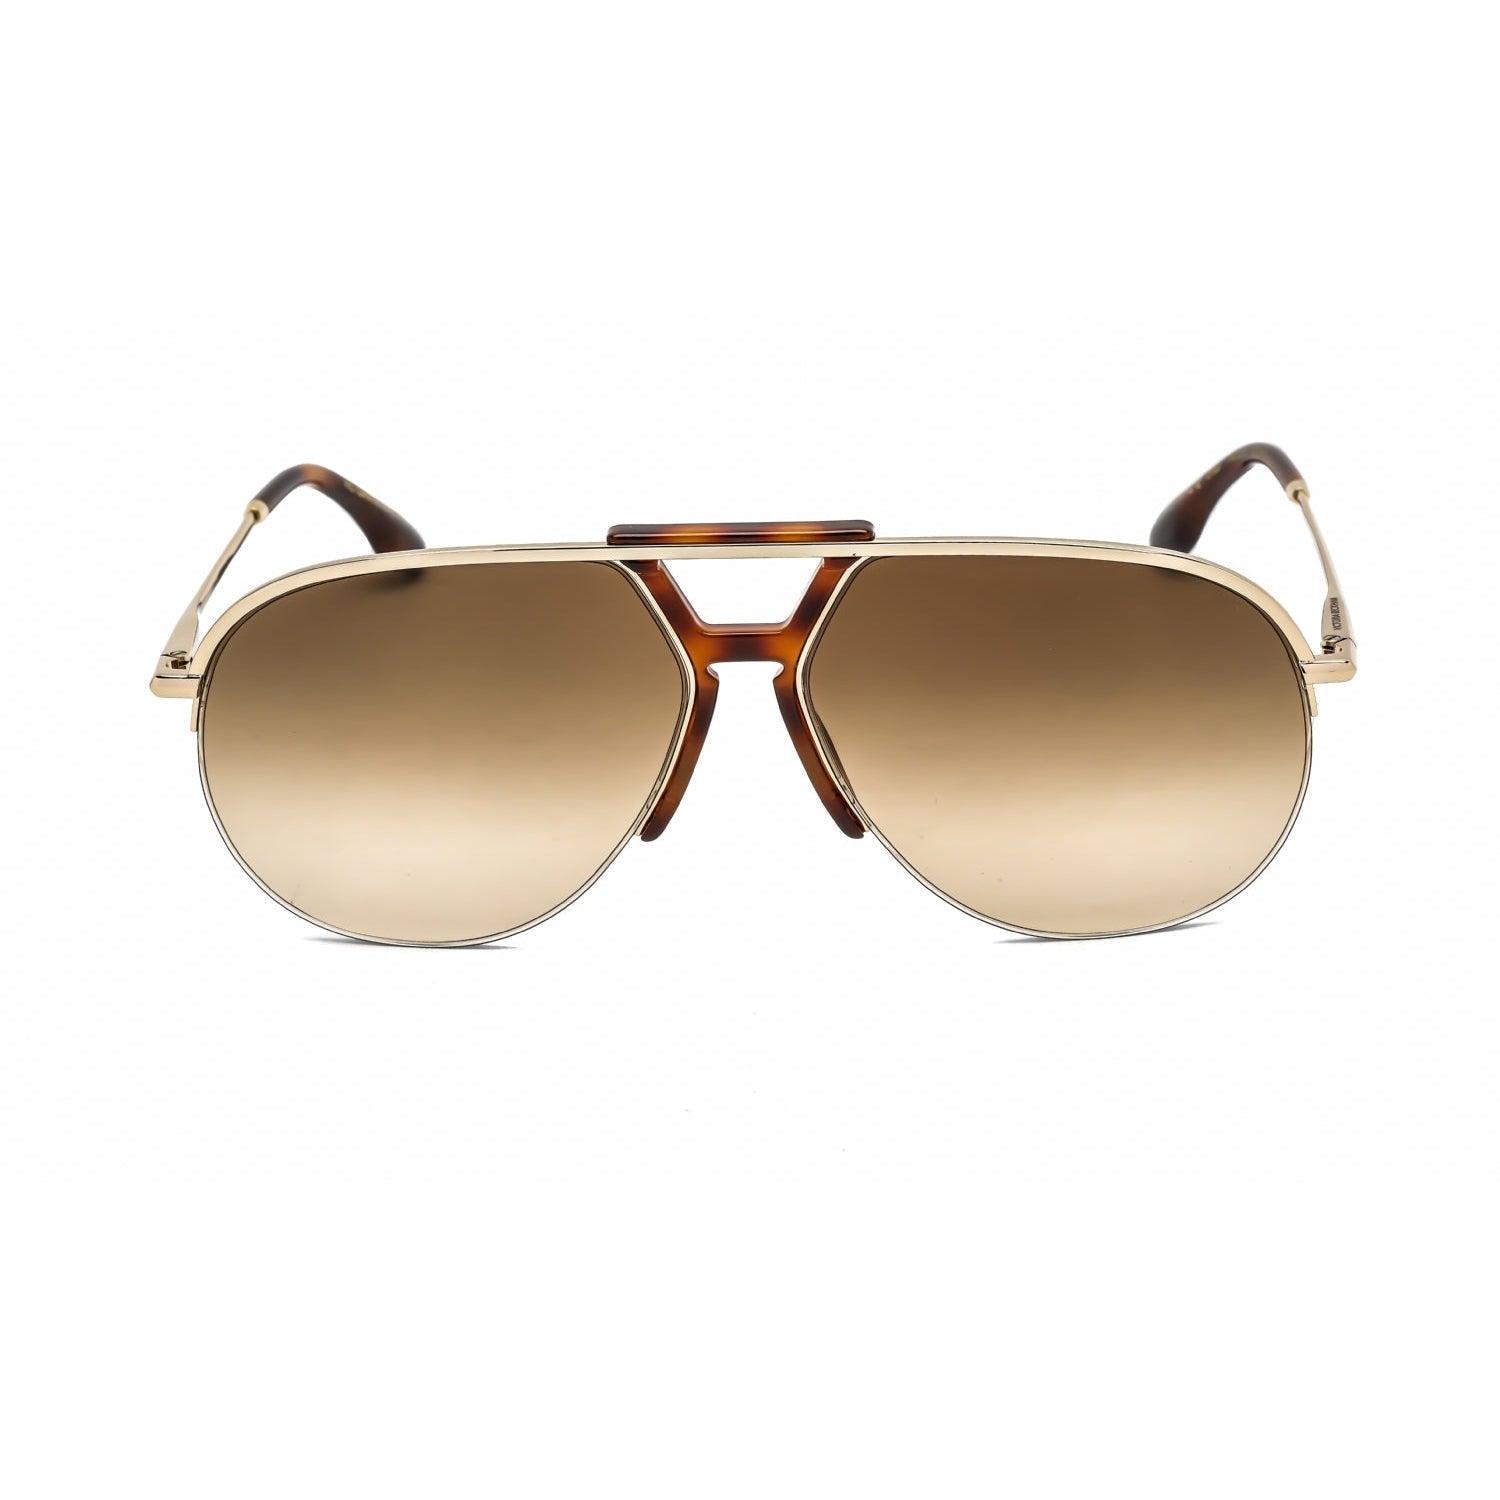 Victoria Beckham Vb222s Sunglasses Gold / Brown Gradient in Metallic | Lyst